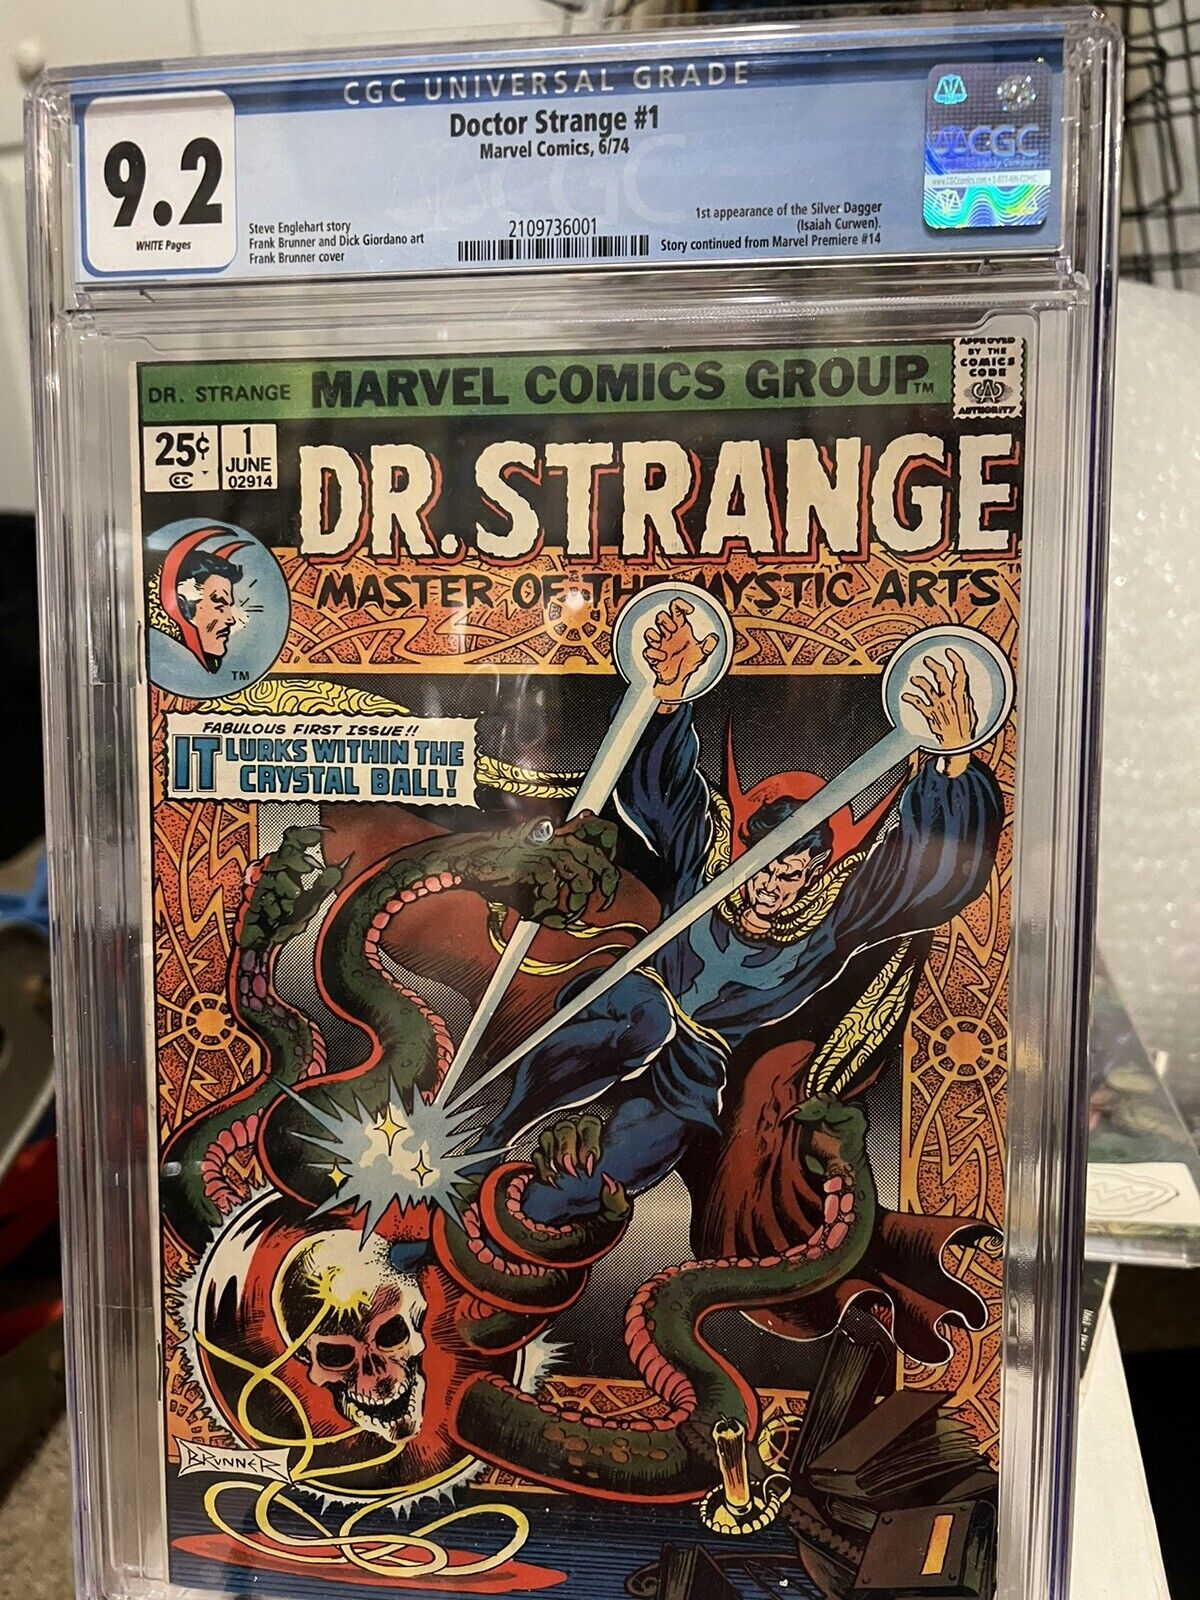 Doctor Strange #1 - Marvel Comics 1974 CGC 9.2 1st appearance of the Silver Dagg